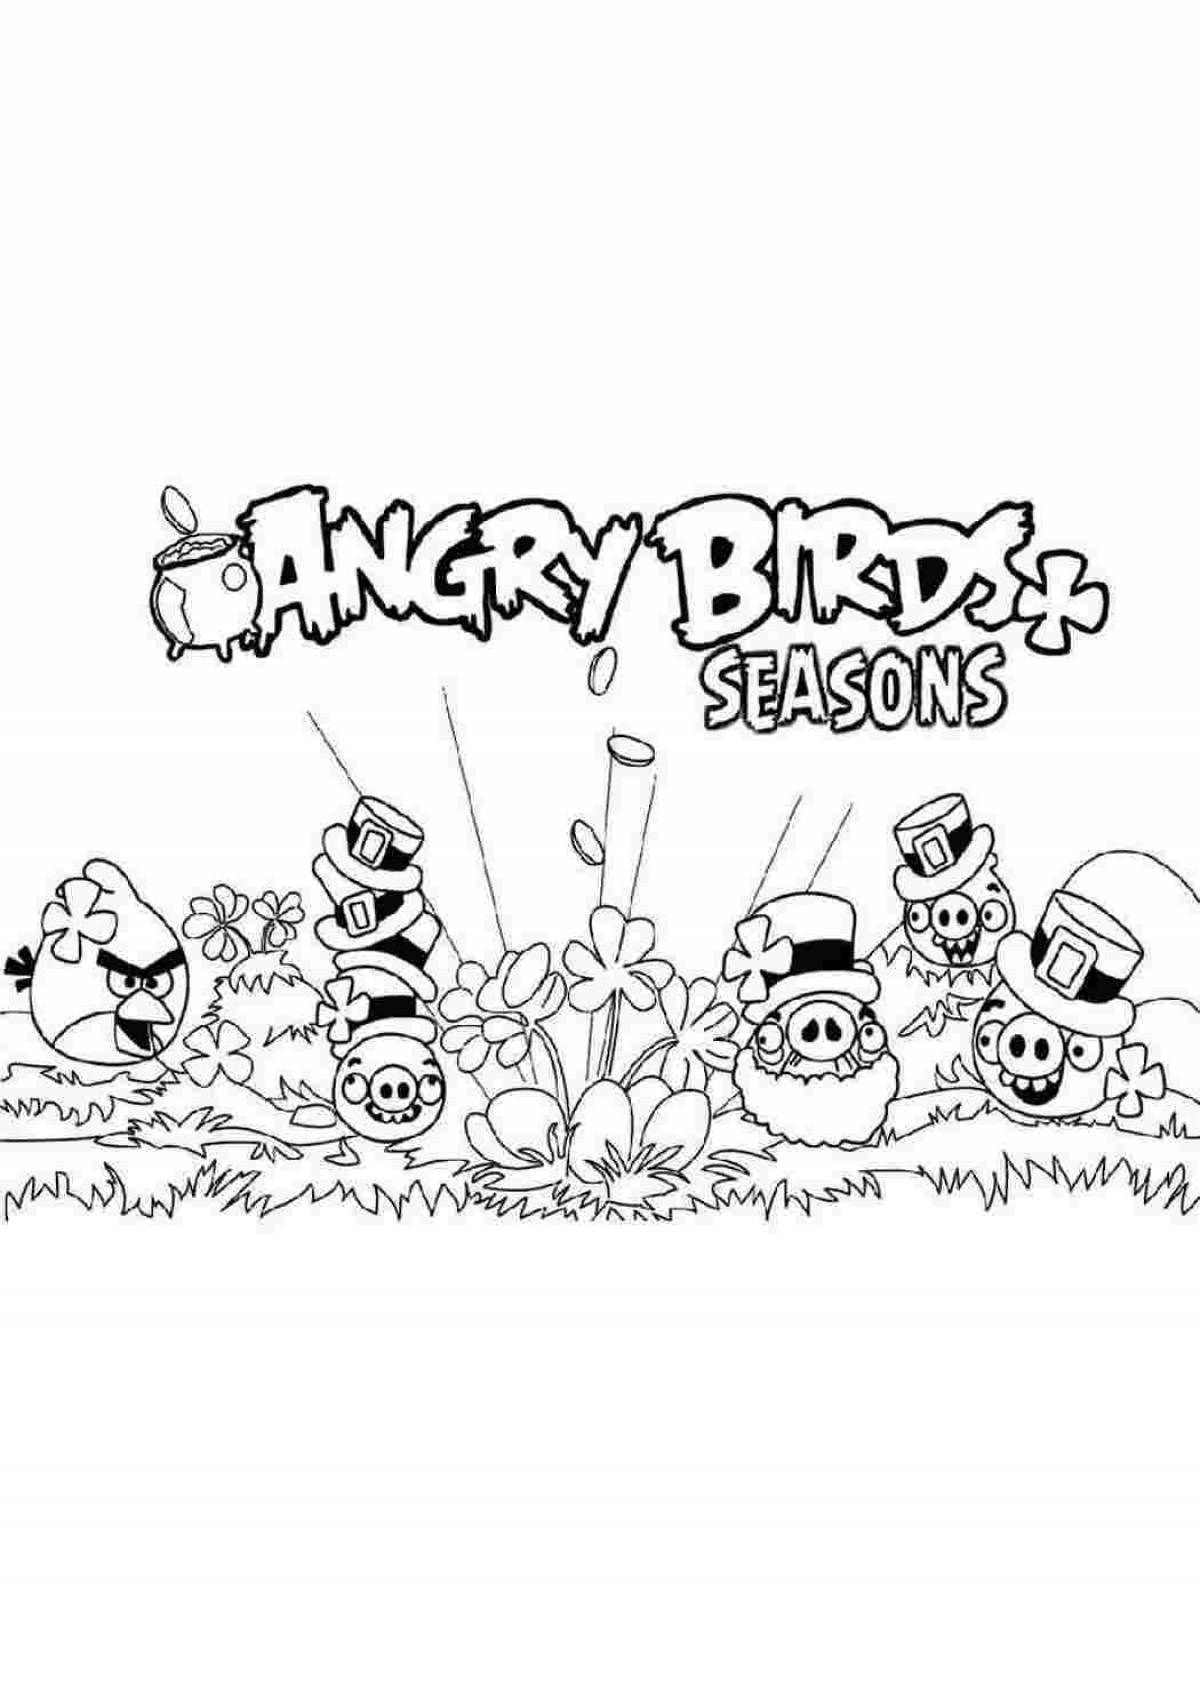 Angry birds seasons #6